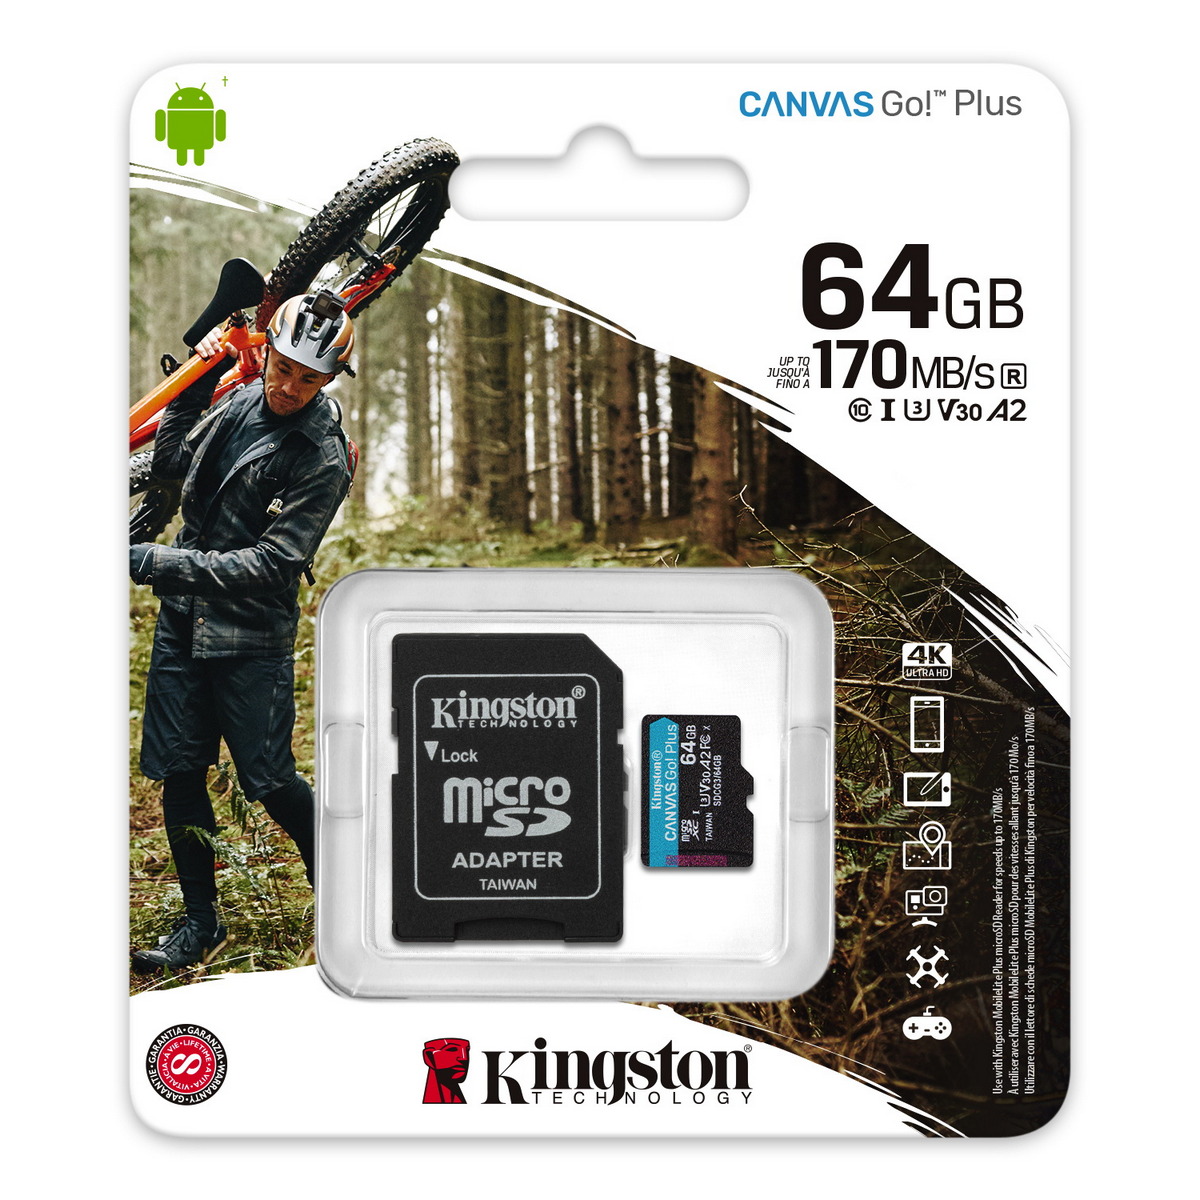 KINGSTON Micro SDXC Card (64 GB) Canvas Go Plus